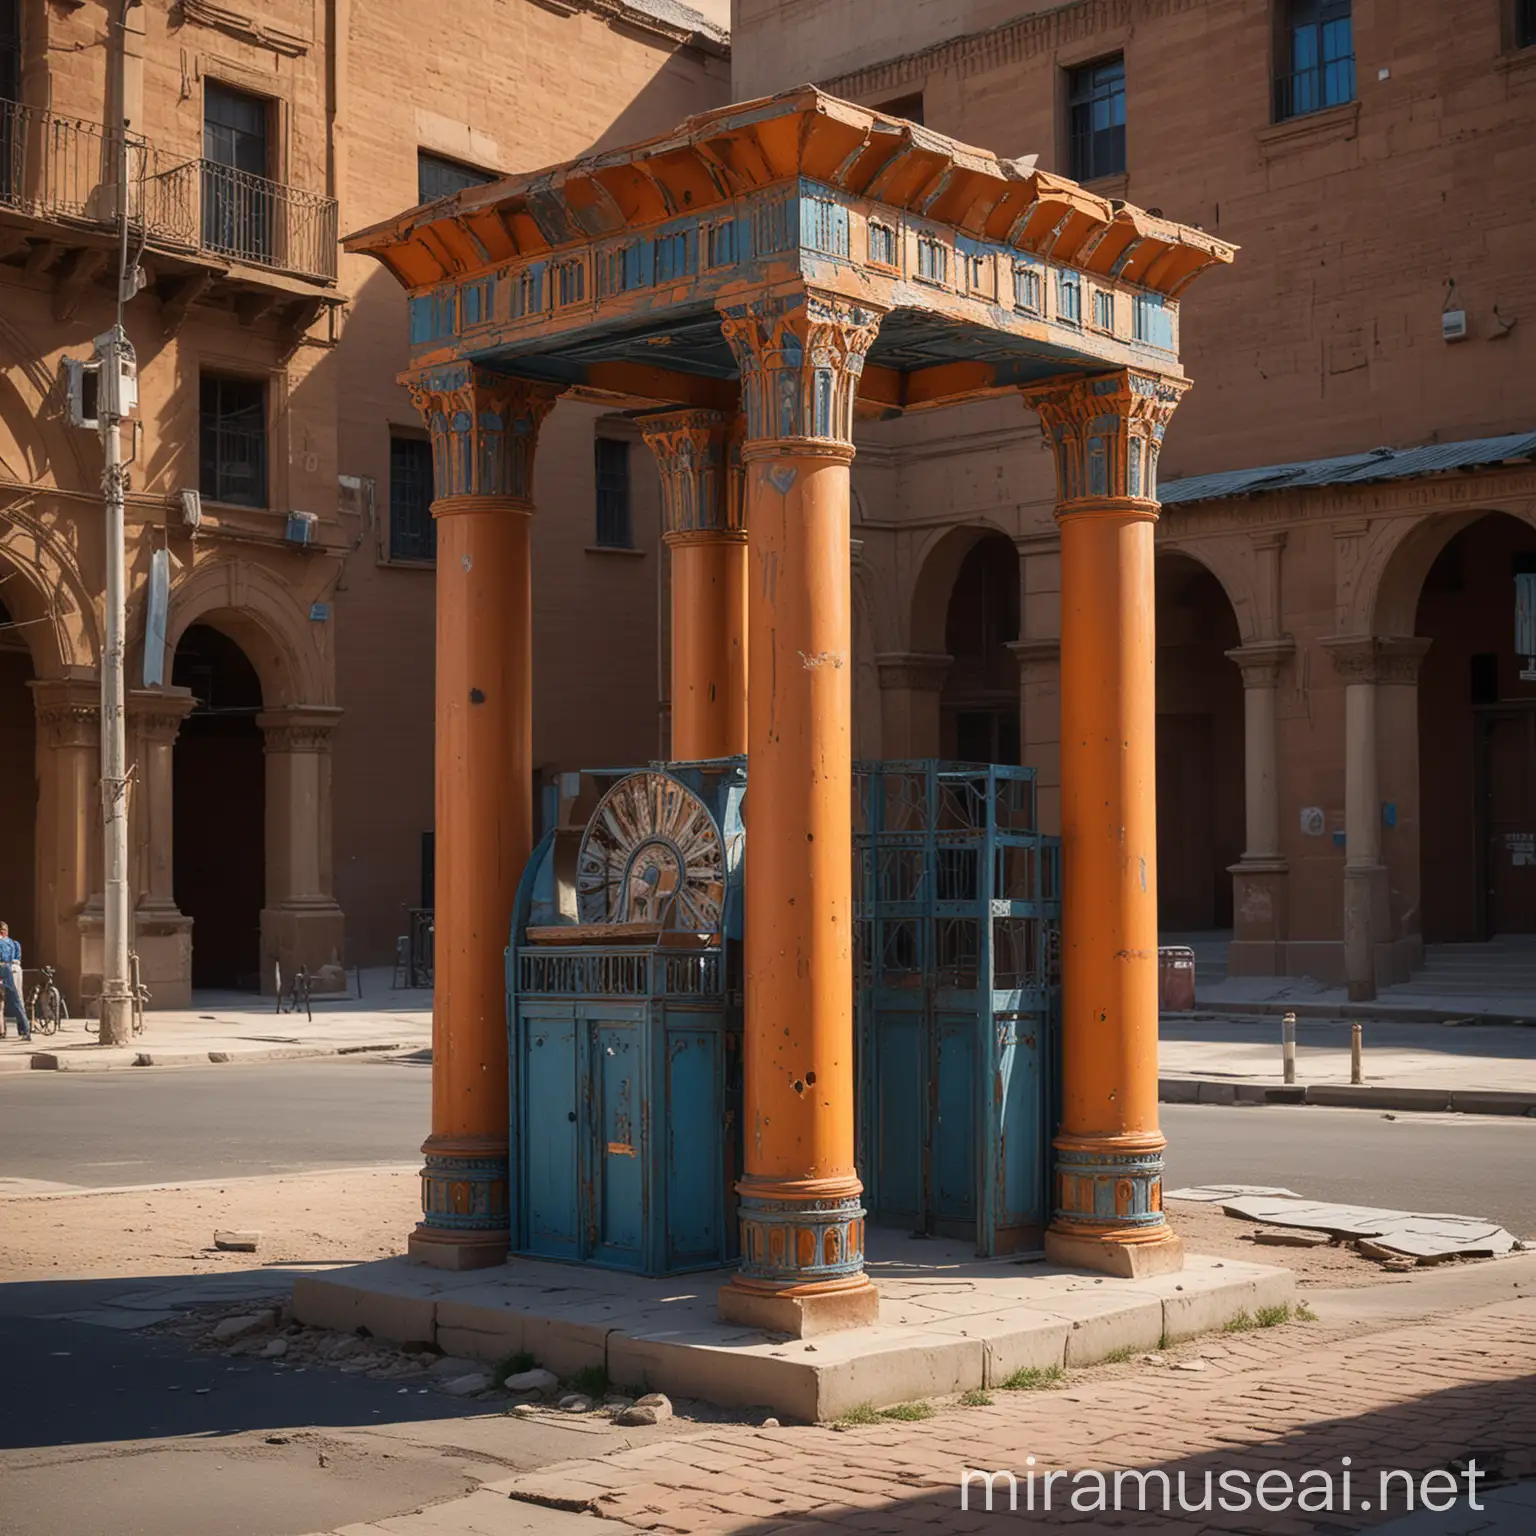 Urban Kiosk with Gearshaped Metal Design and Pharaonic Column